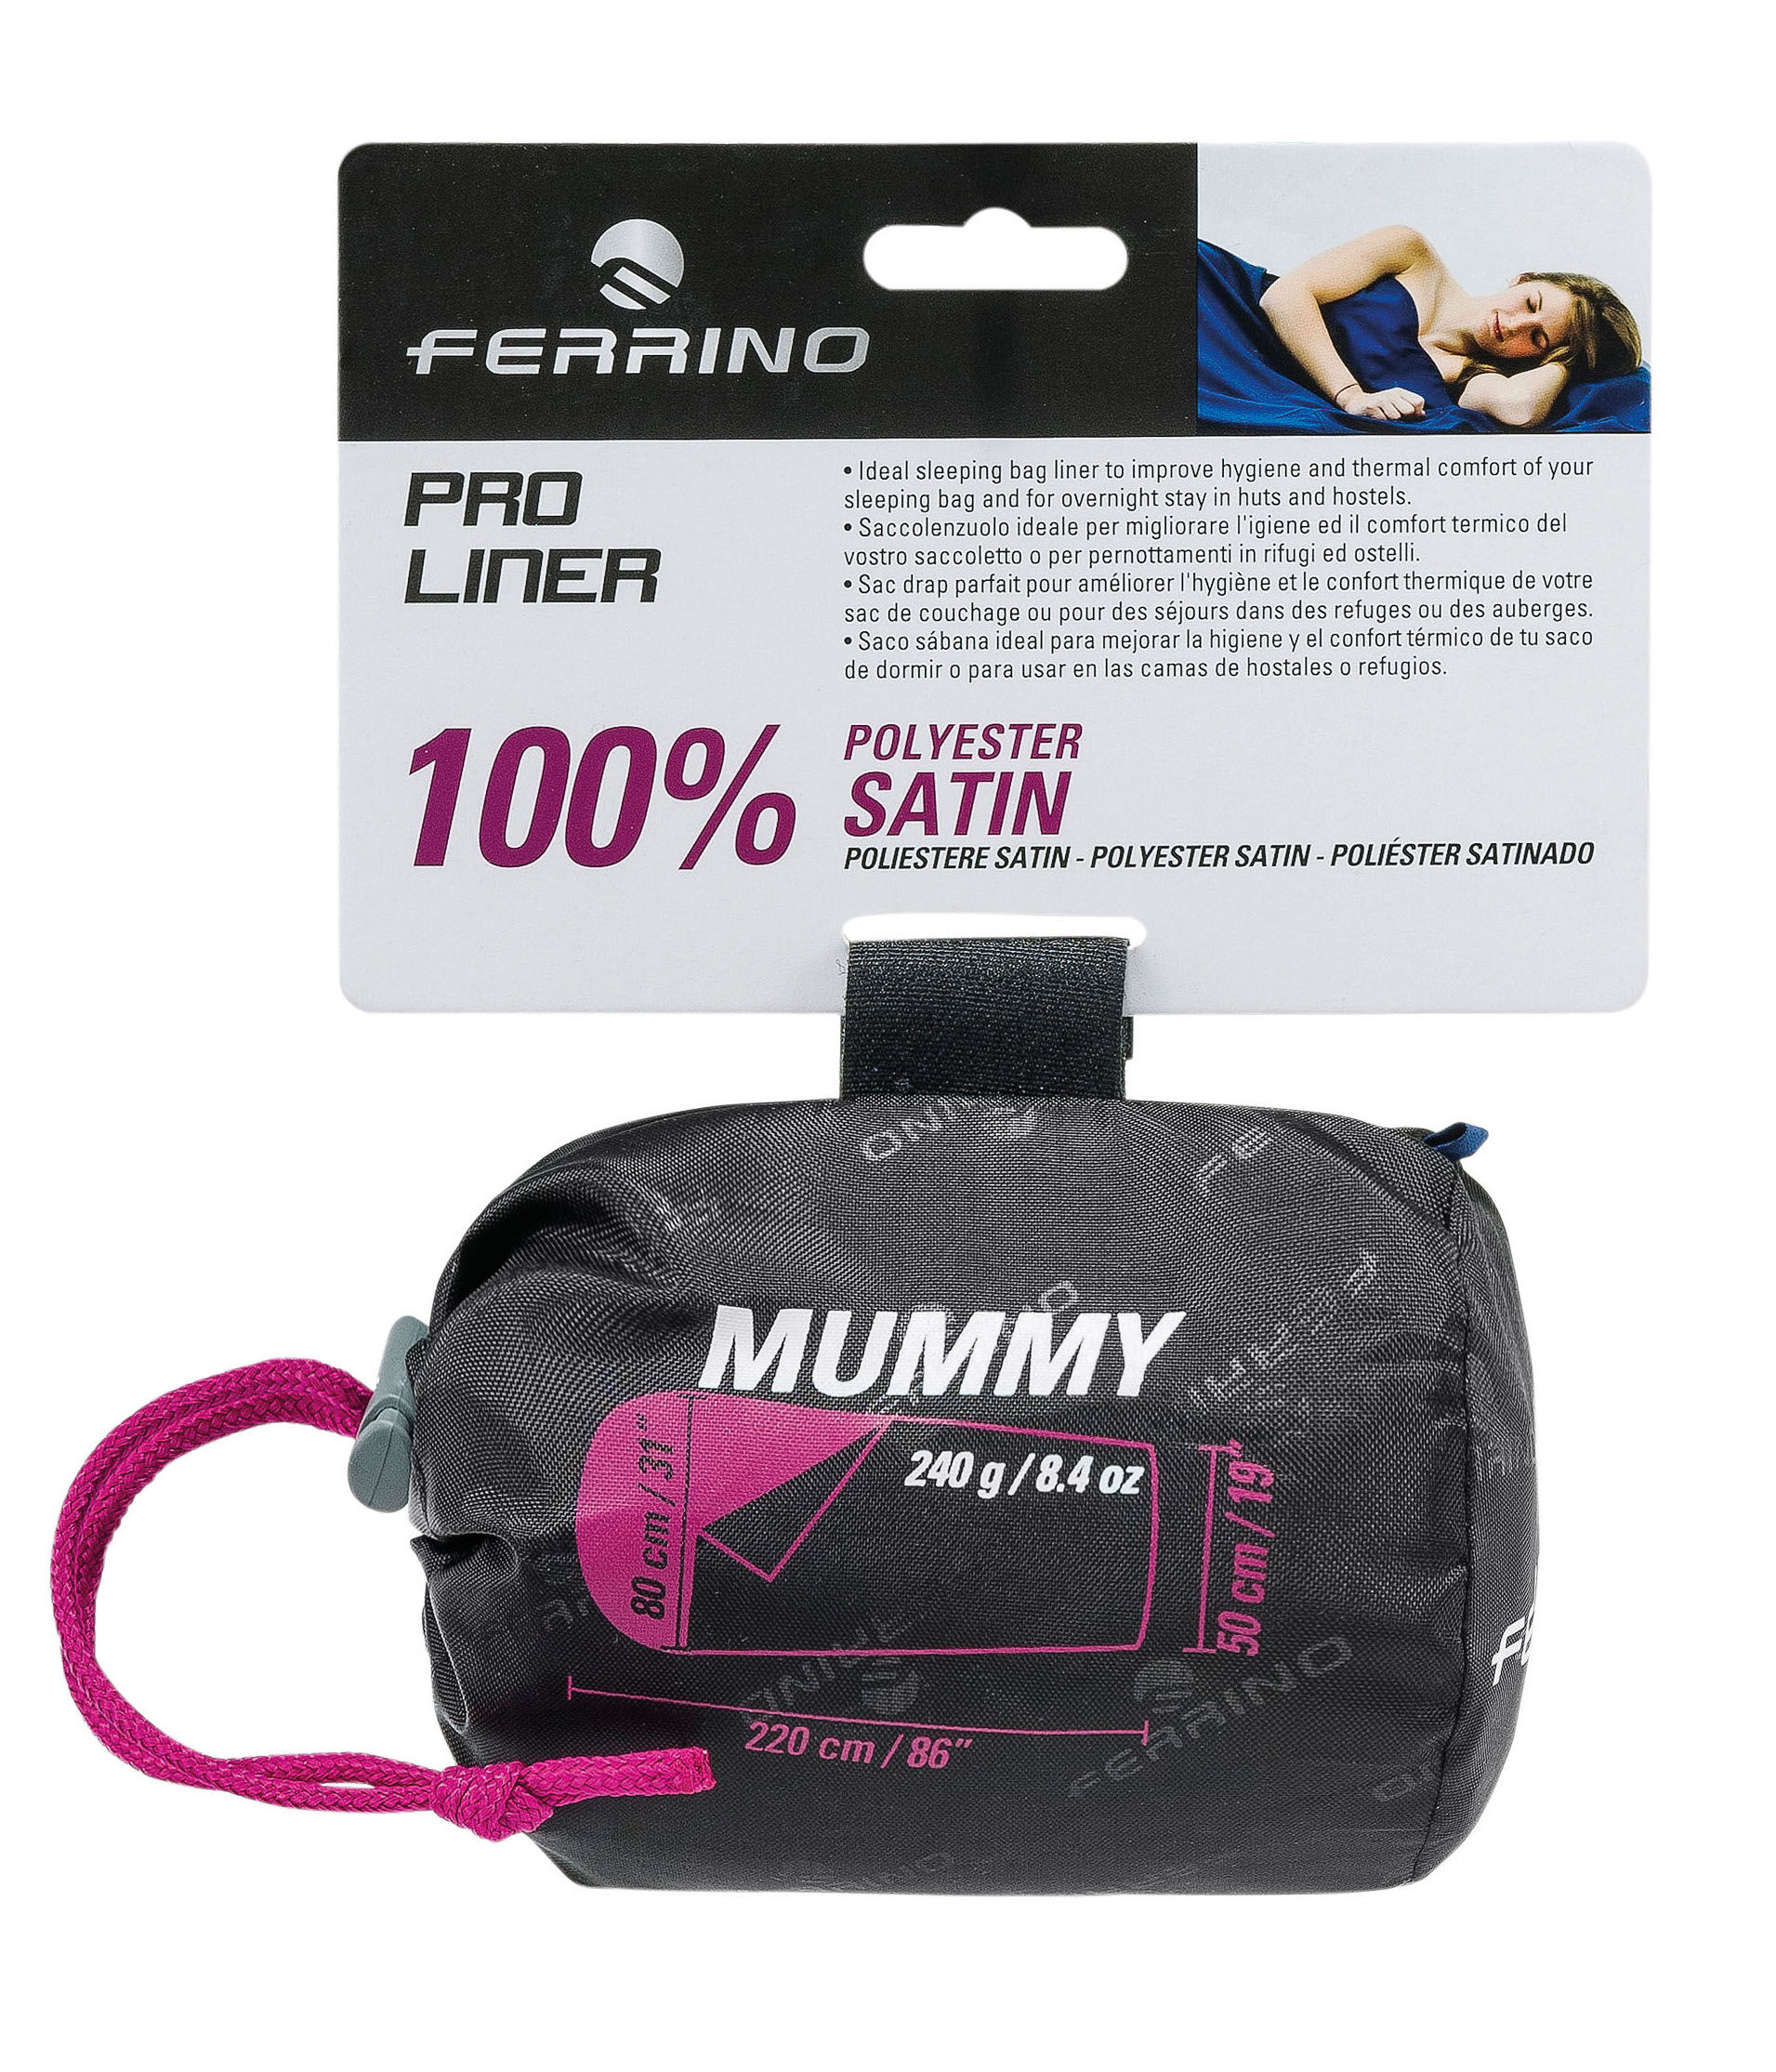 Ferrino - Pro Liner Mummy - Sacco lenzuolo